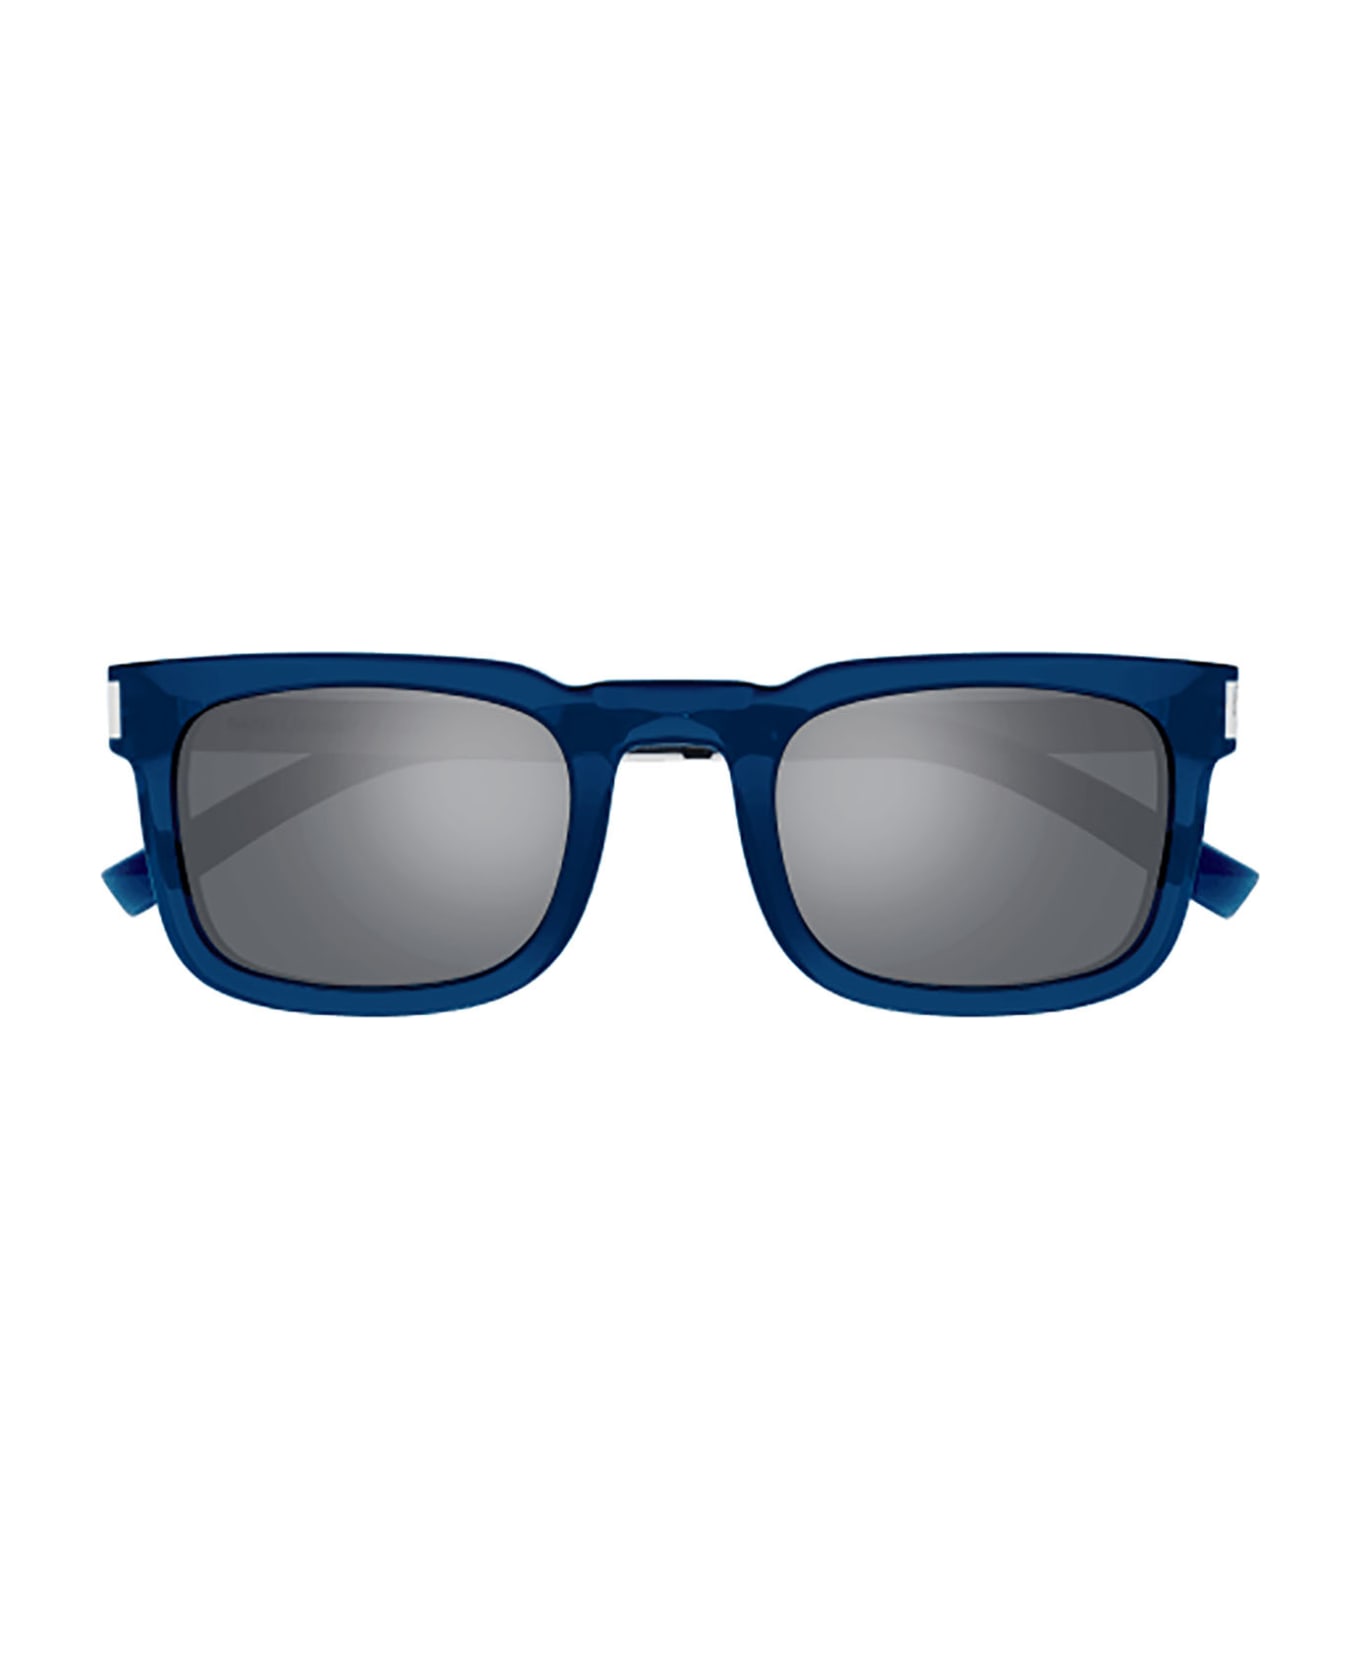 Saint Laurent Eyewear SL 581 Sunglasses - Blue Silver Silver